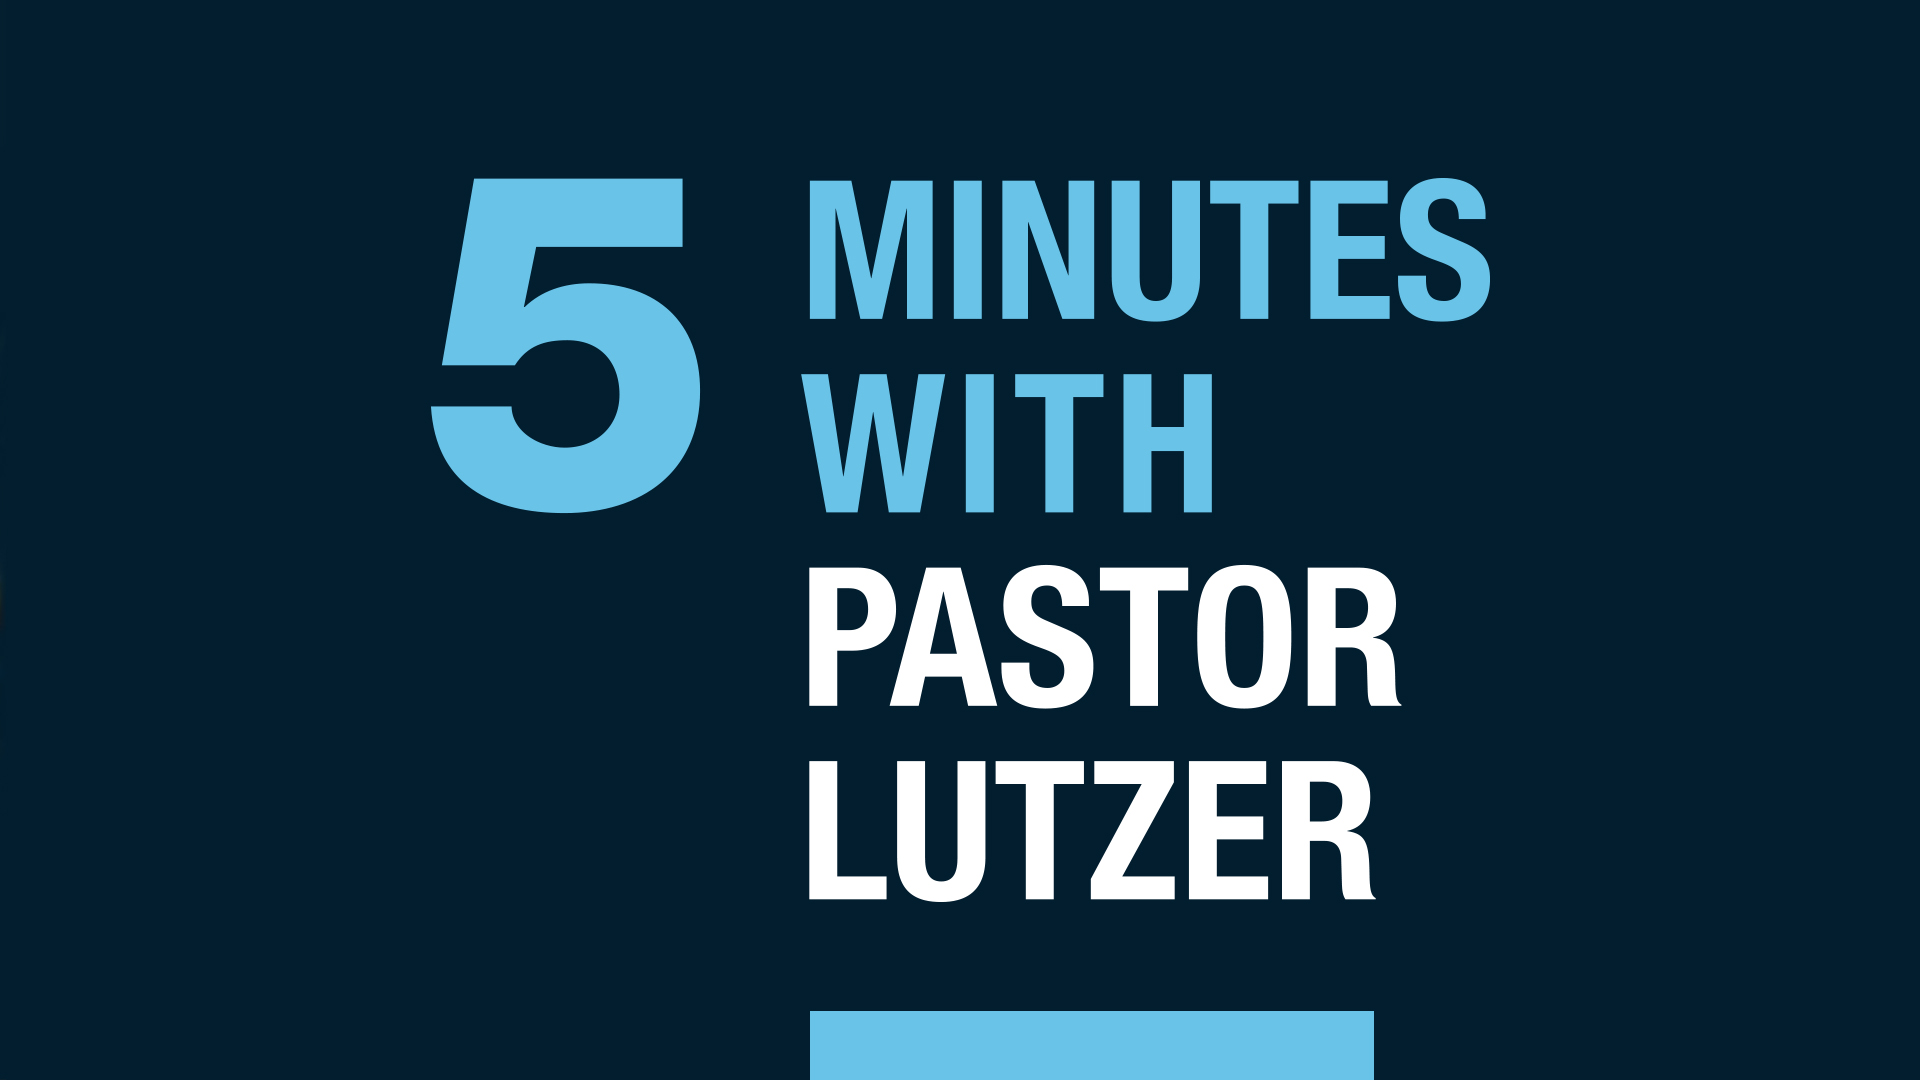 5 Minutes with Pastor Lutzer radio program